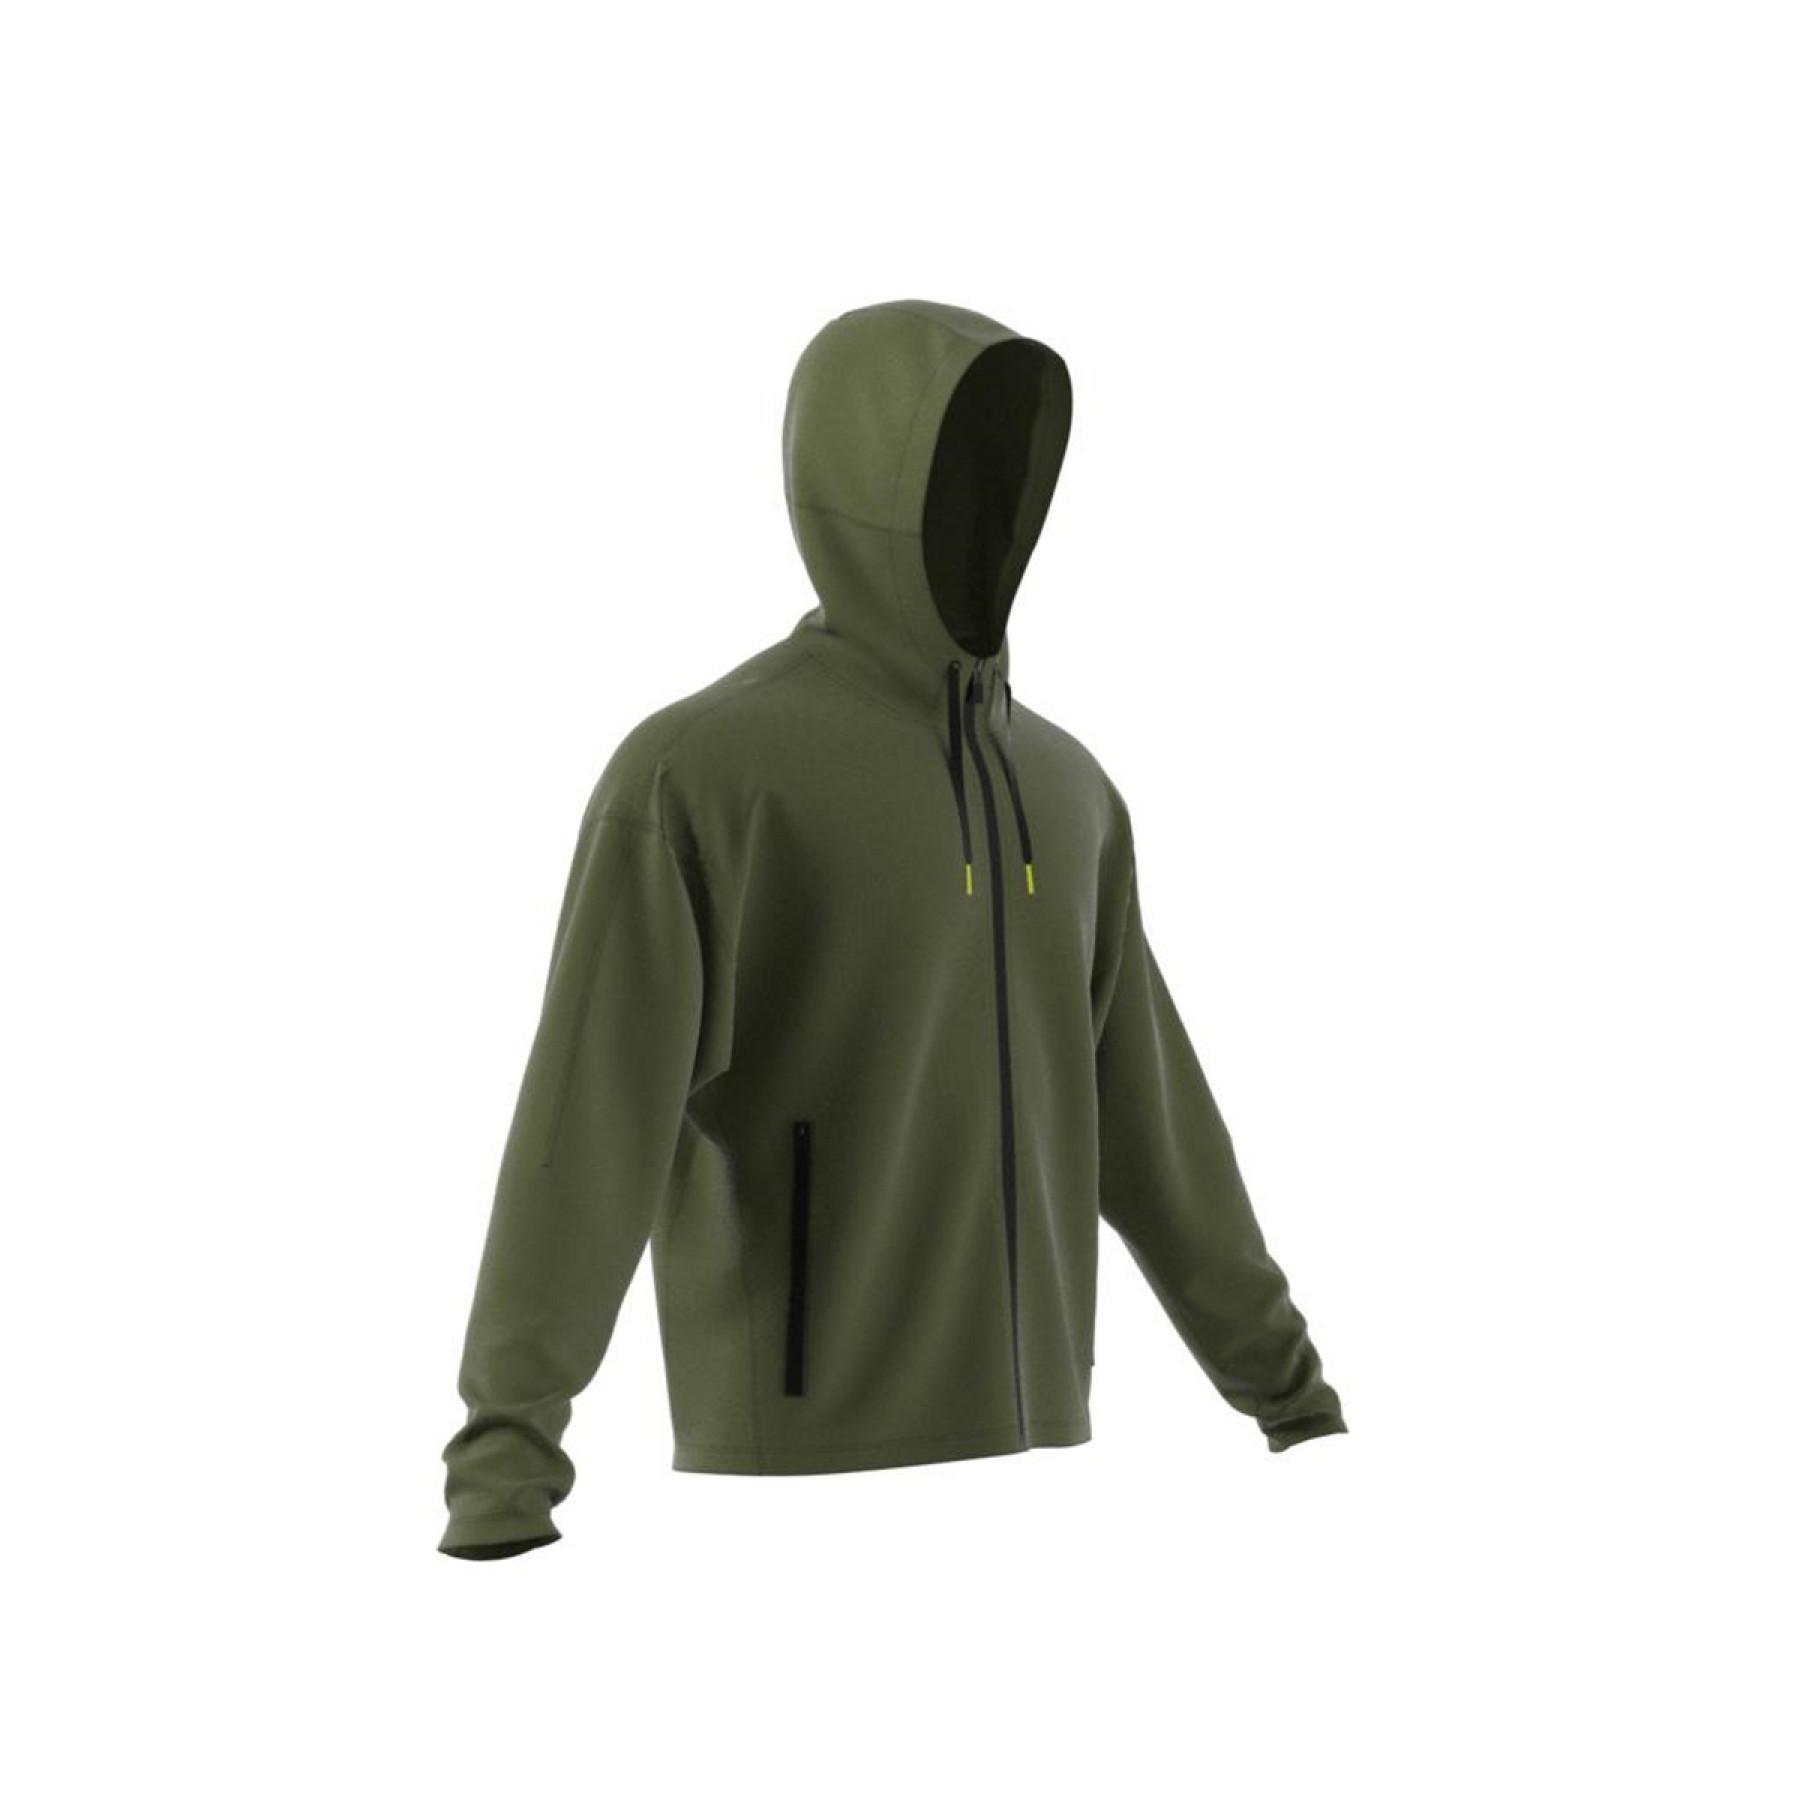 Sweatshirt à capuche adidas Studio Tech Full-Zip